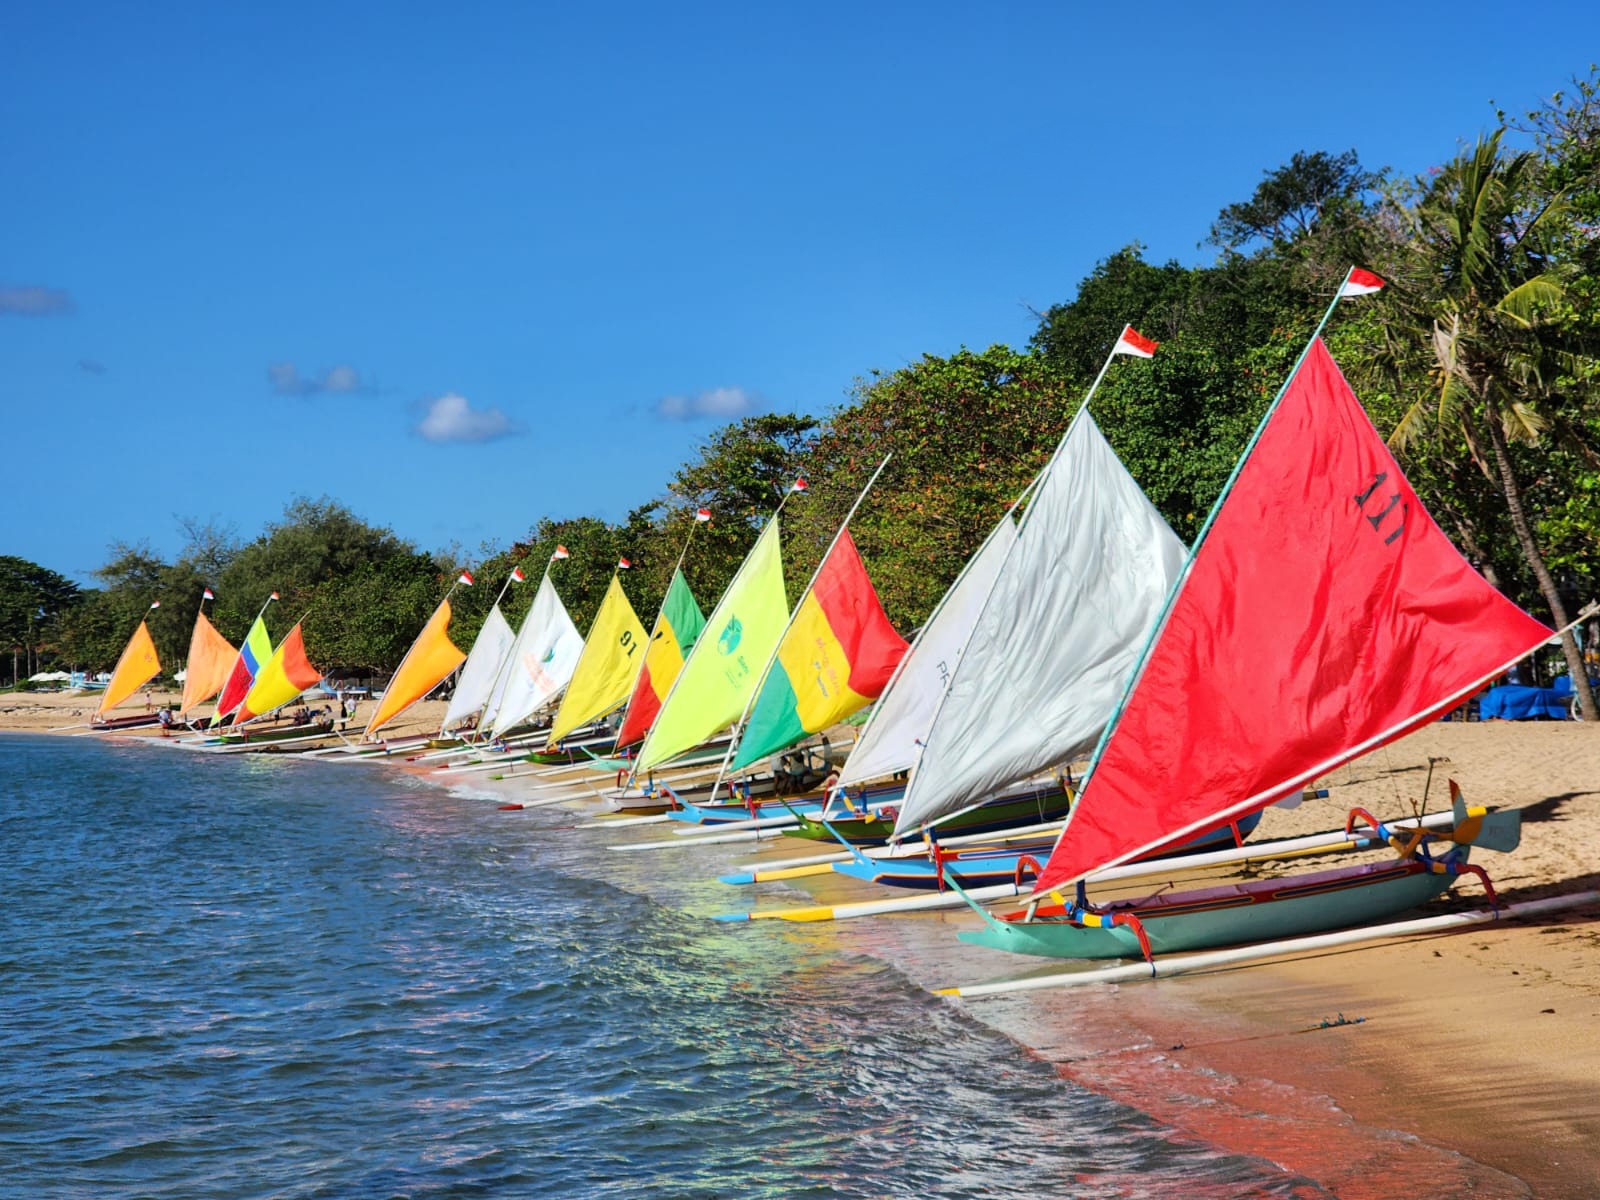 Sebanyak 30 peserta Jukung Parade tengah bersiap-siap di pinggir Pantai Segara Ayu dalam perhelatan AstraPay Sanur Village Festival 2023 ke-16 tahun, Kamis, 20 Juli 2022. | IST